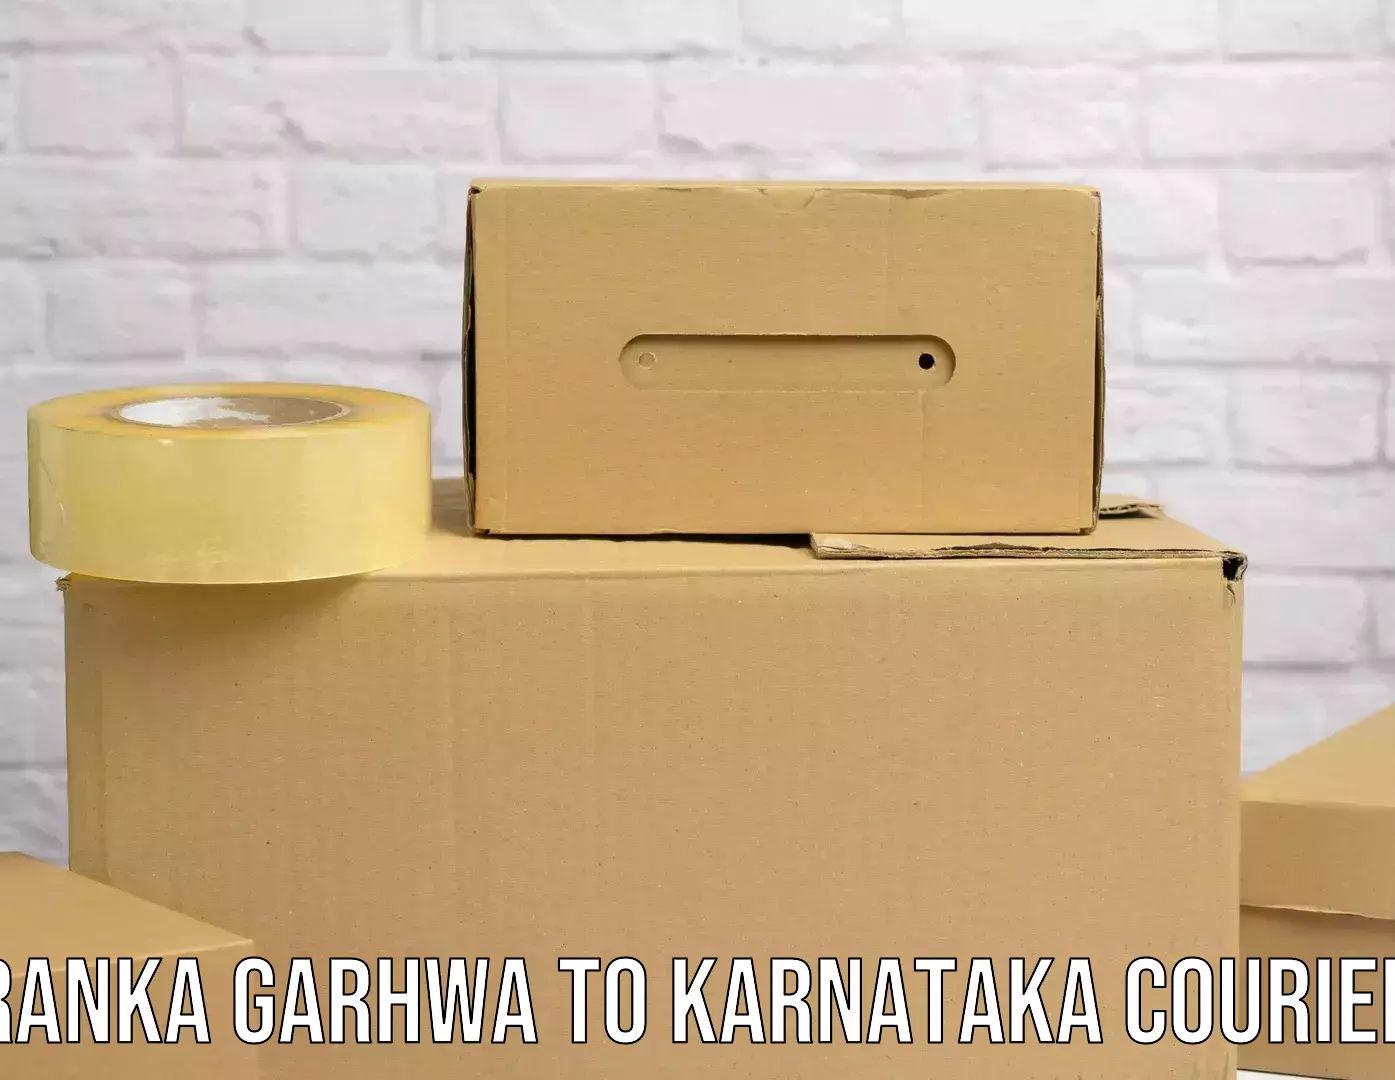 Seamless shipping experience Ranka Garhwa to Kollegal